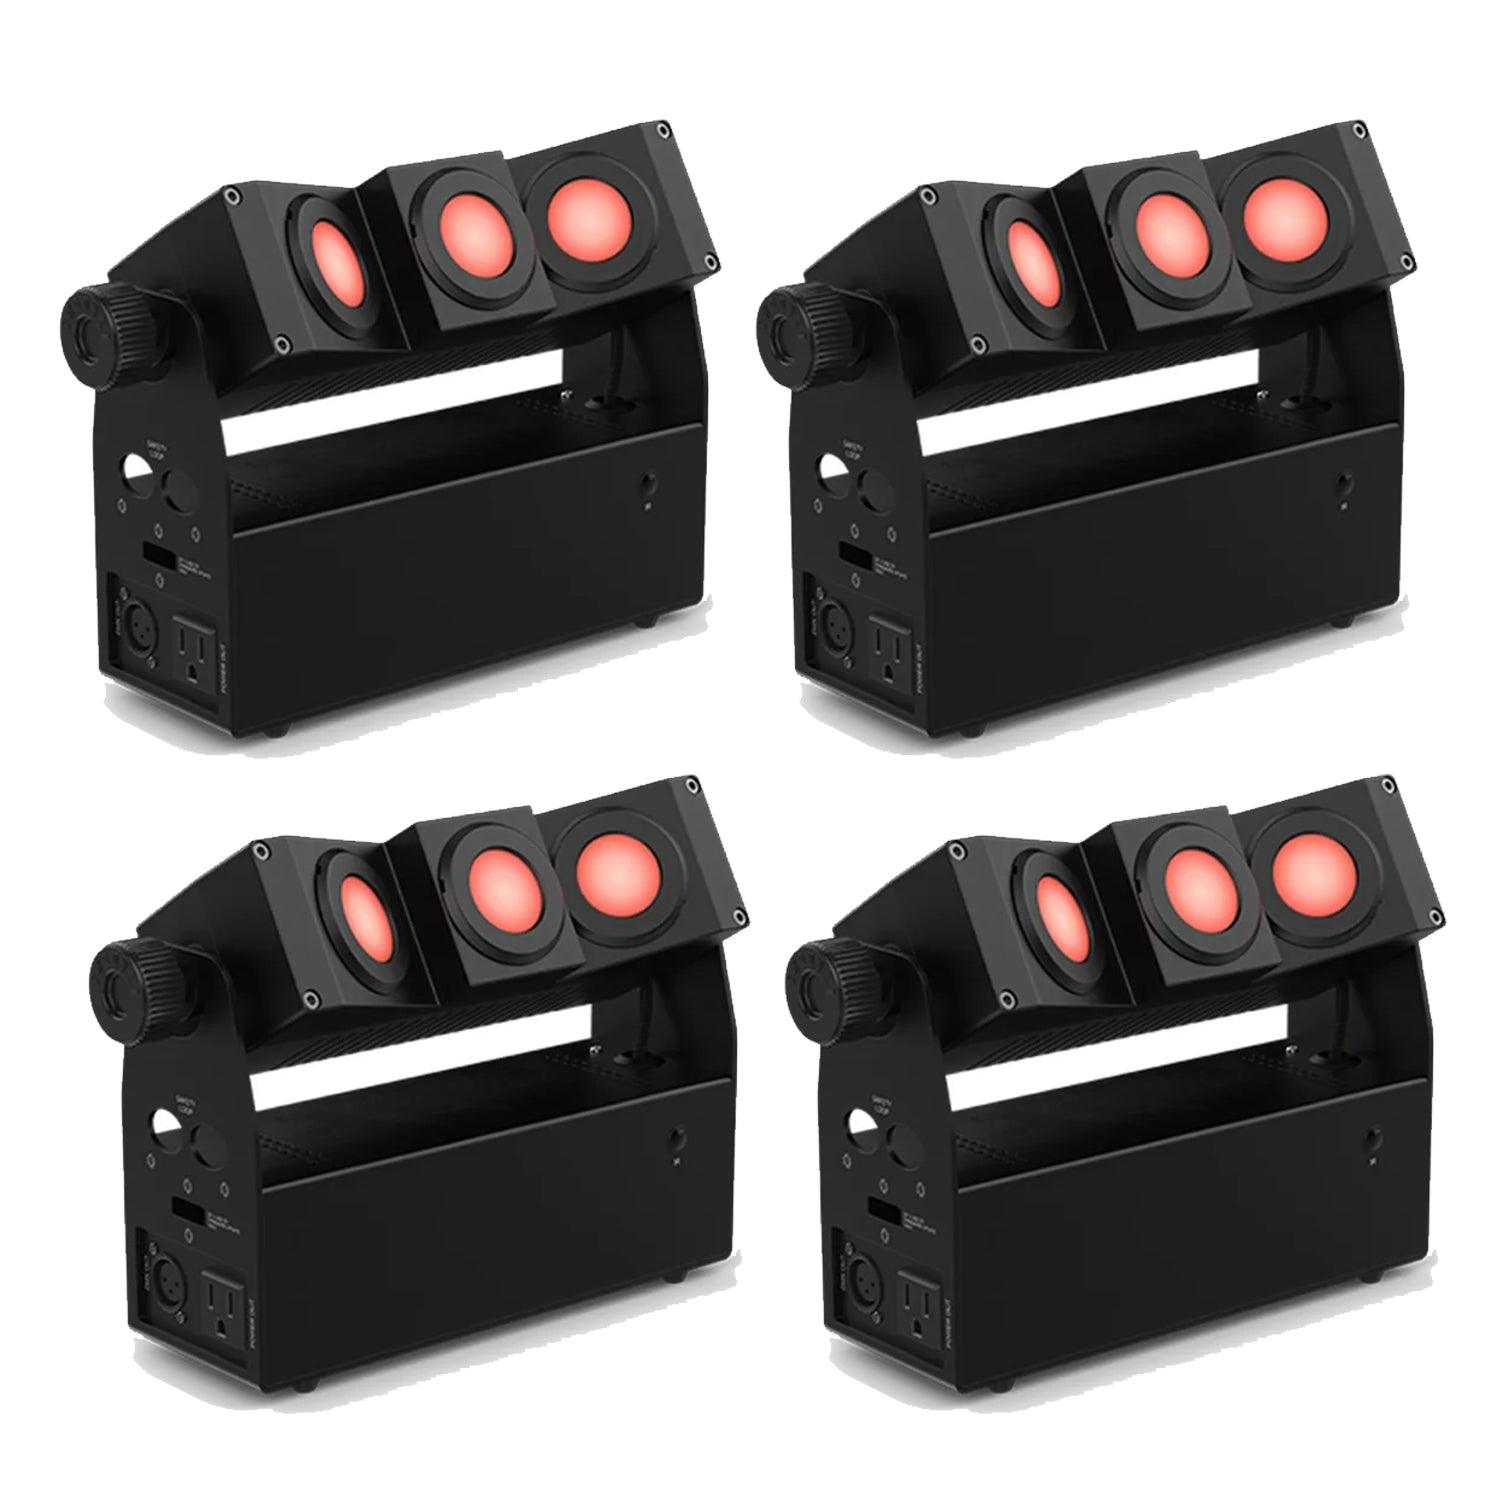 4 x Chauvet DJ EZBeam Q3 ILS Battery Powered Uplighter Effect Light - DY Pro Audio